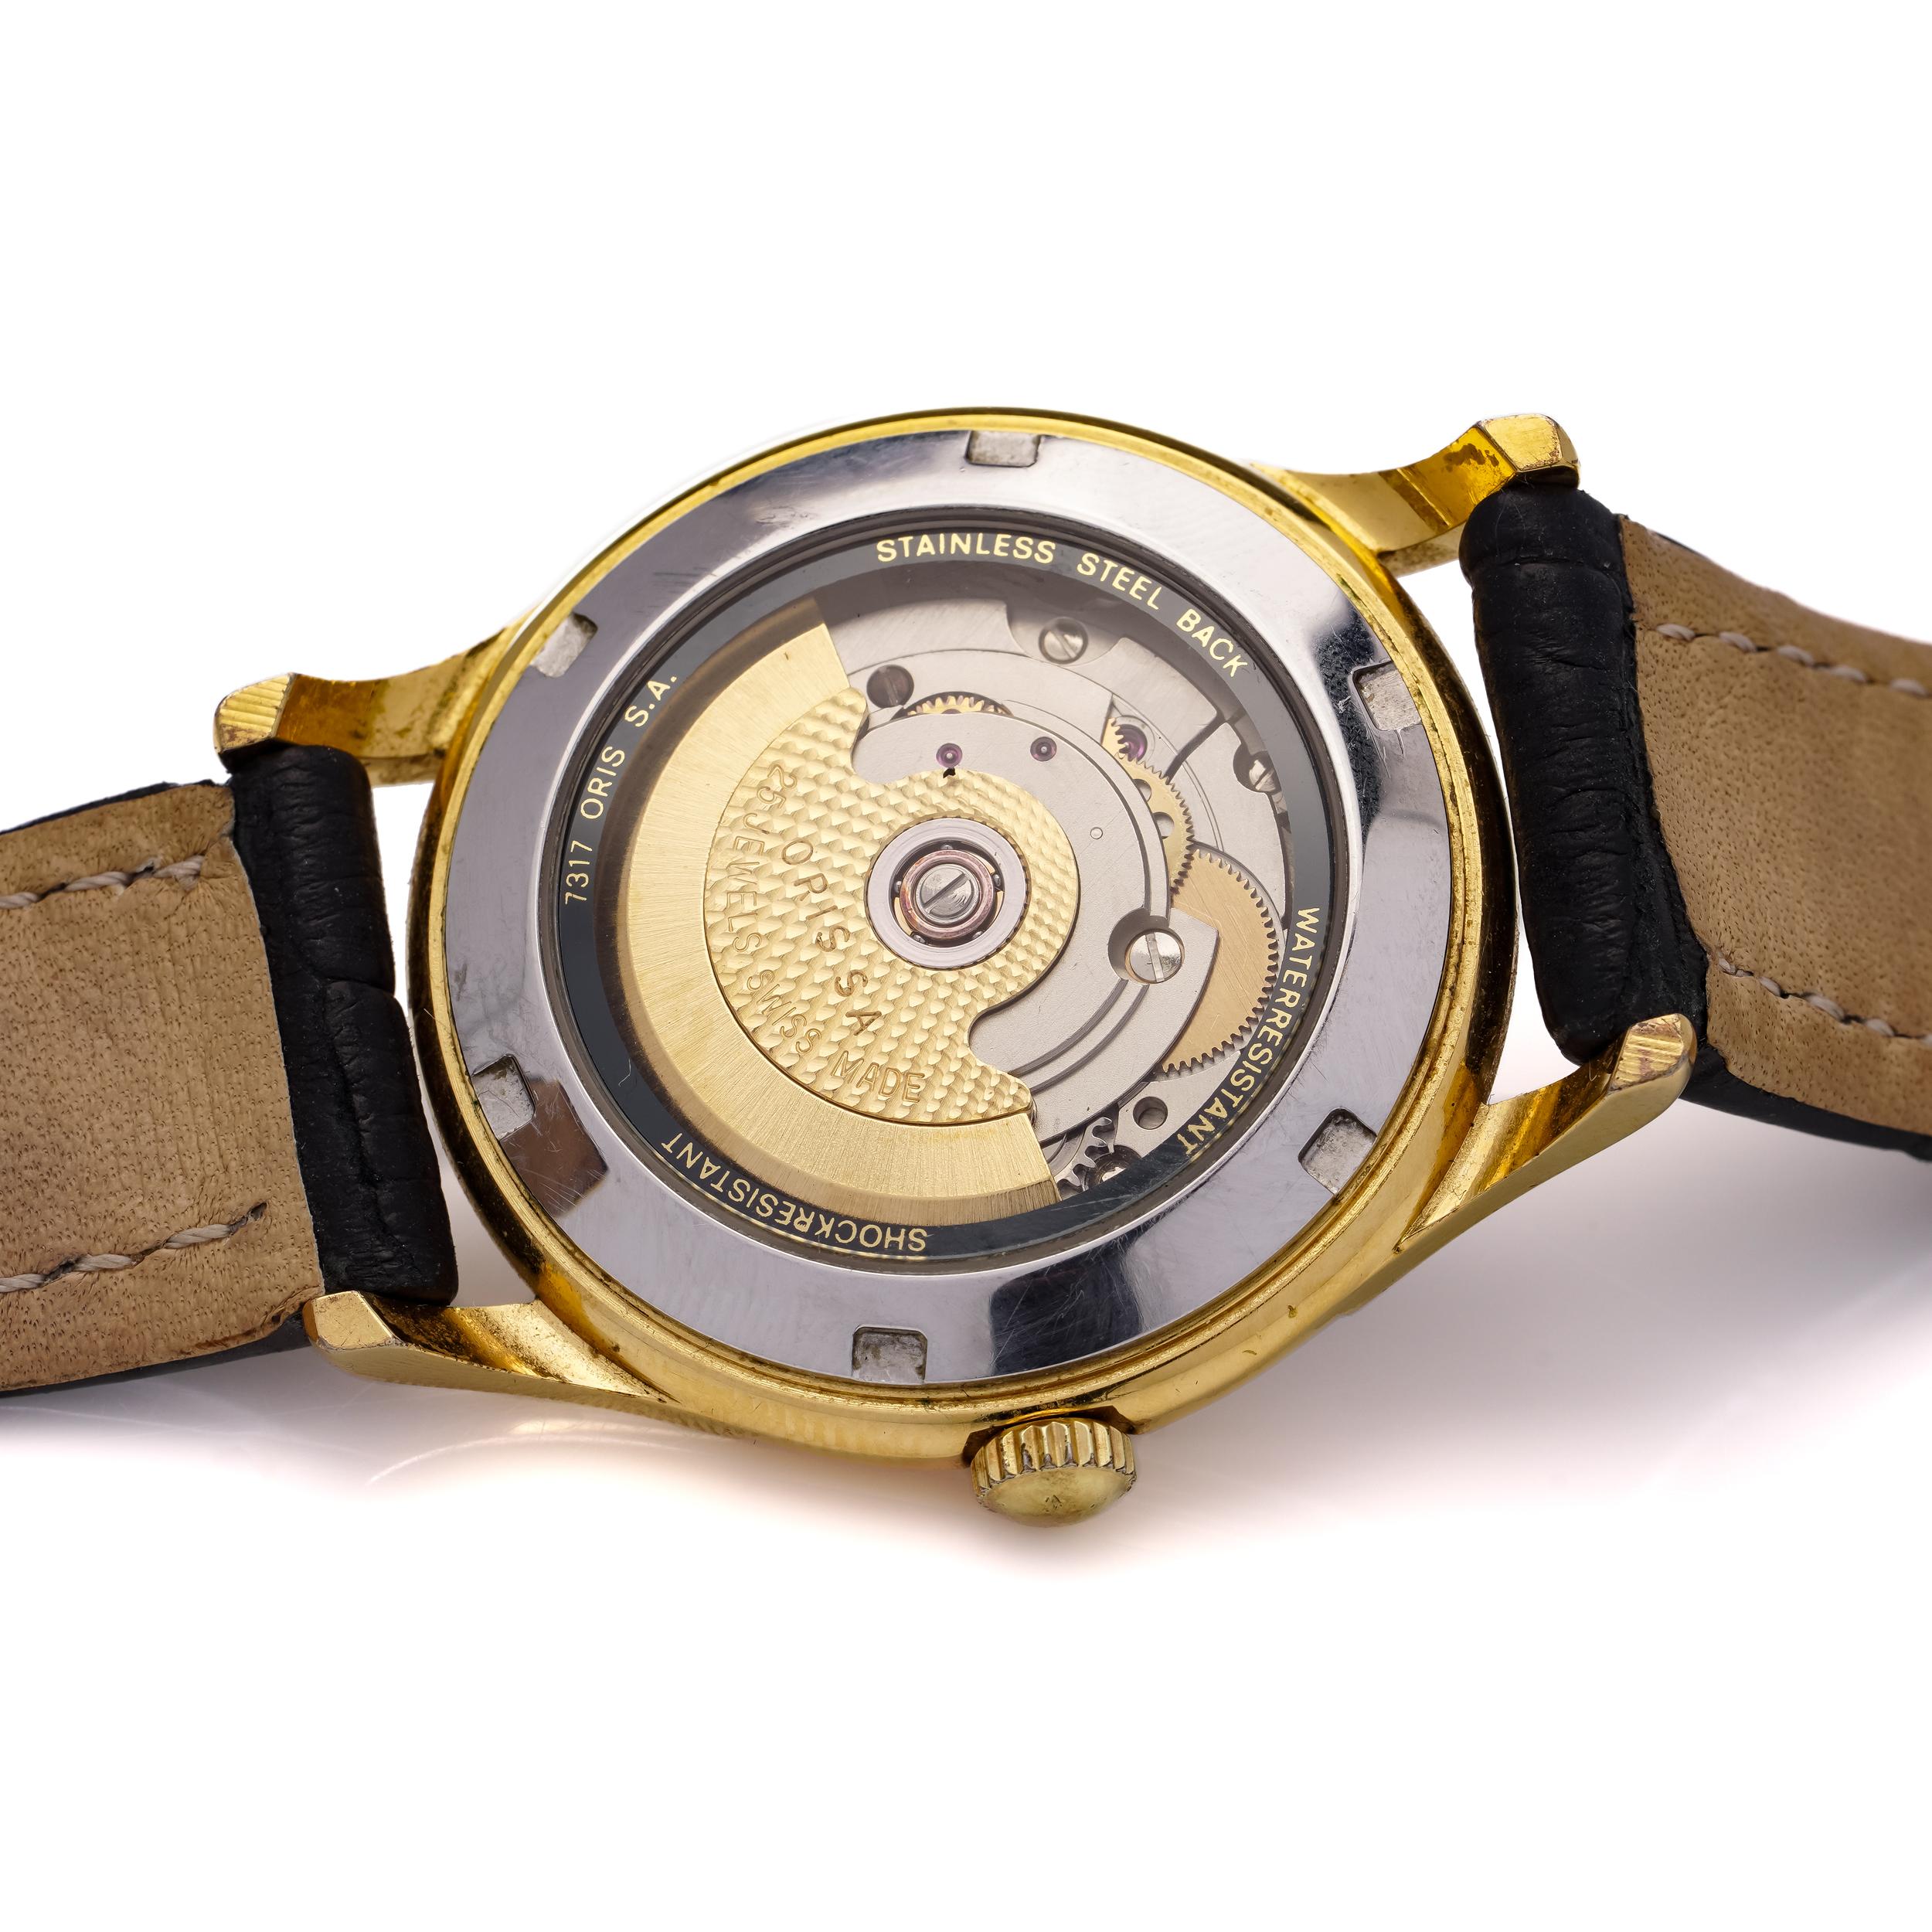  Oris watch model 7317, 25 jewels automatic movement. 1970's 1